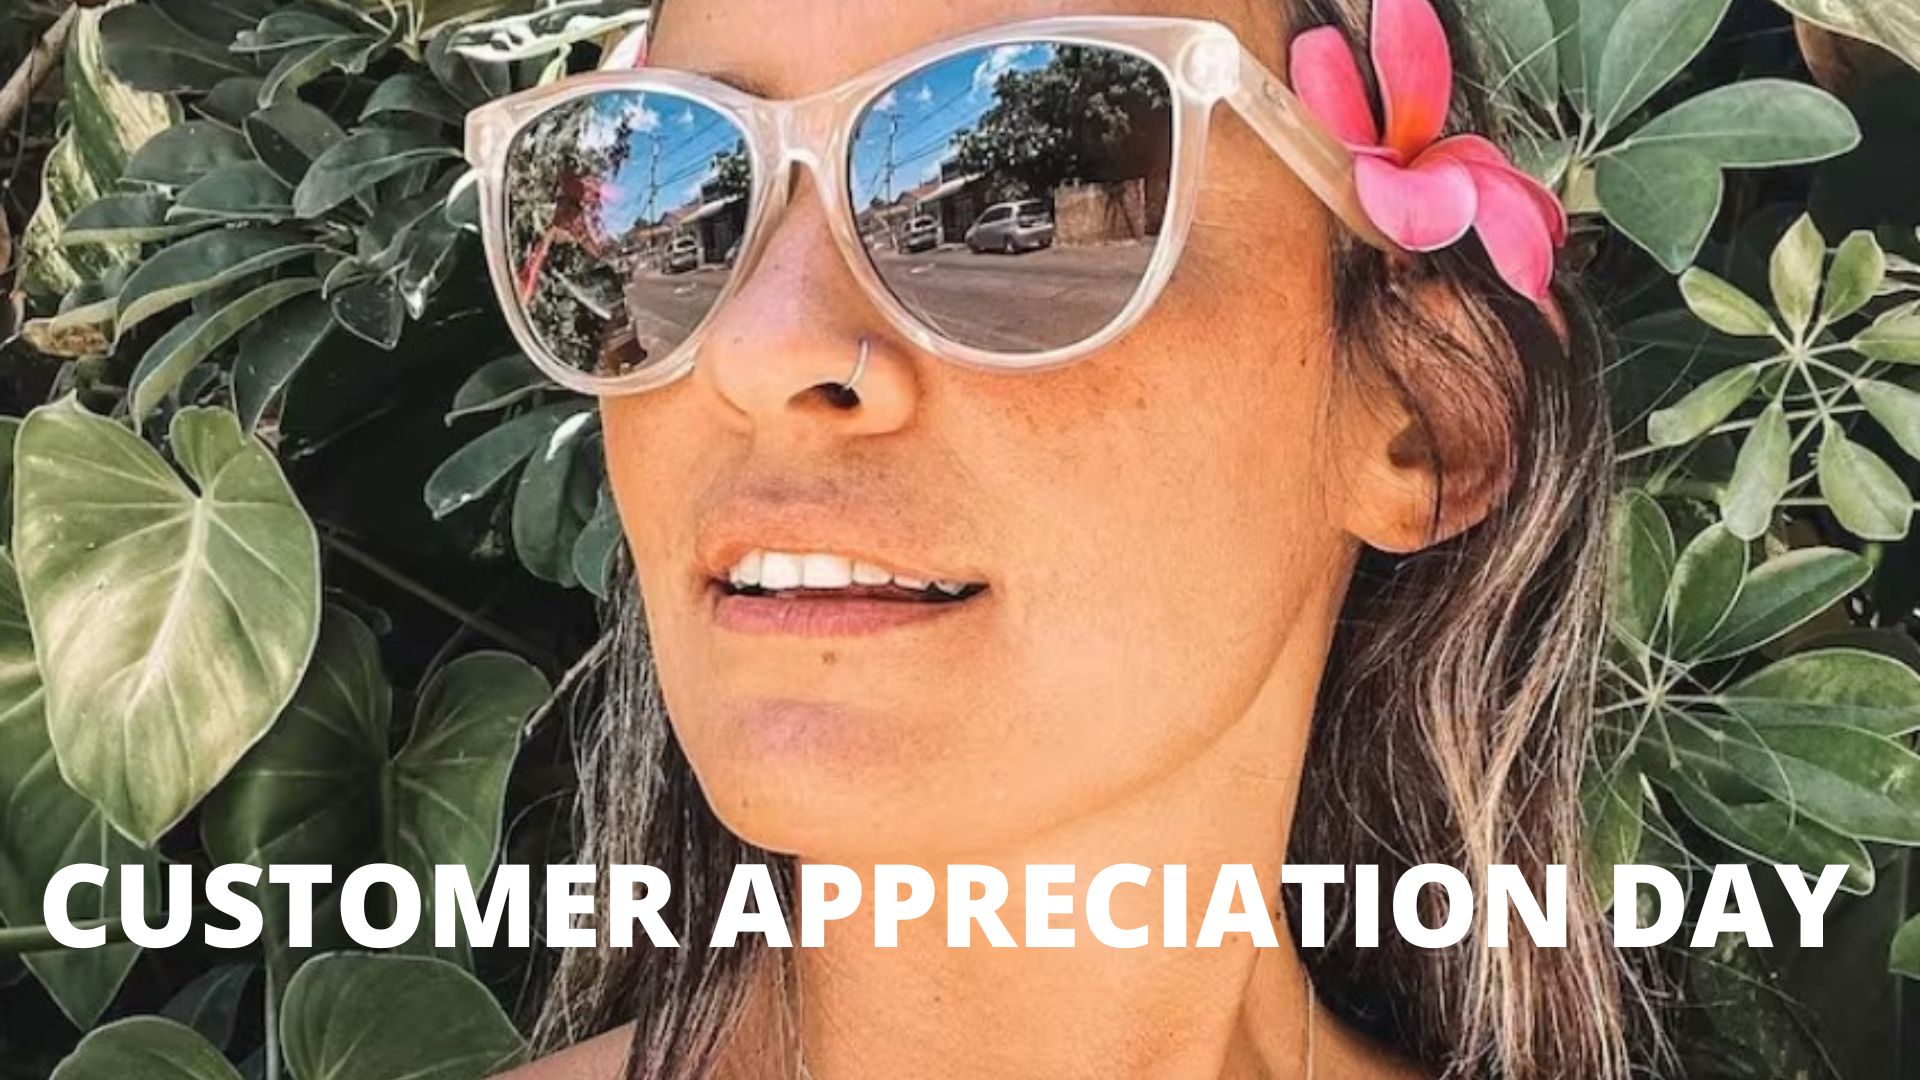 Customer Appreciation Day at Premier Vision: